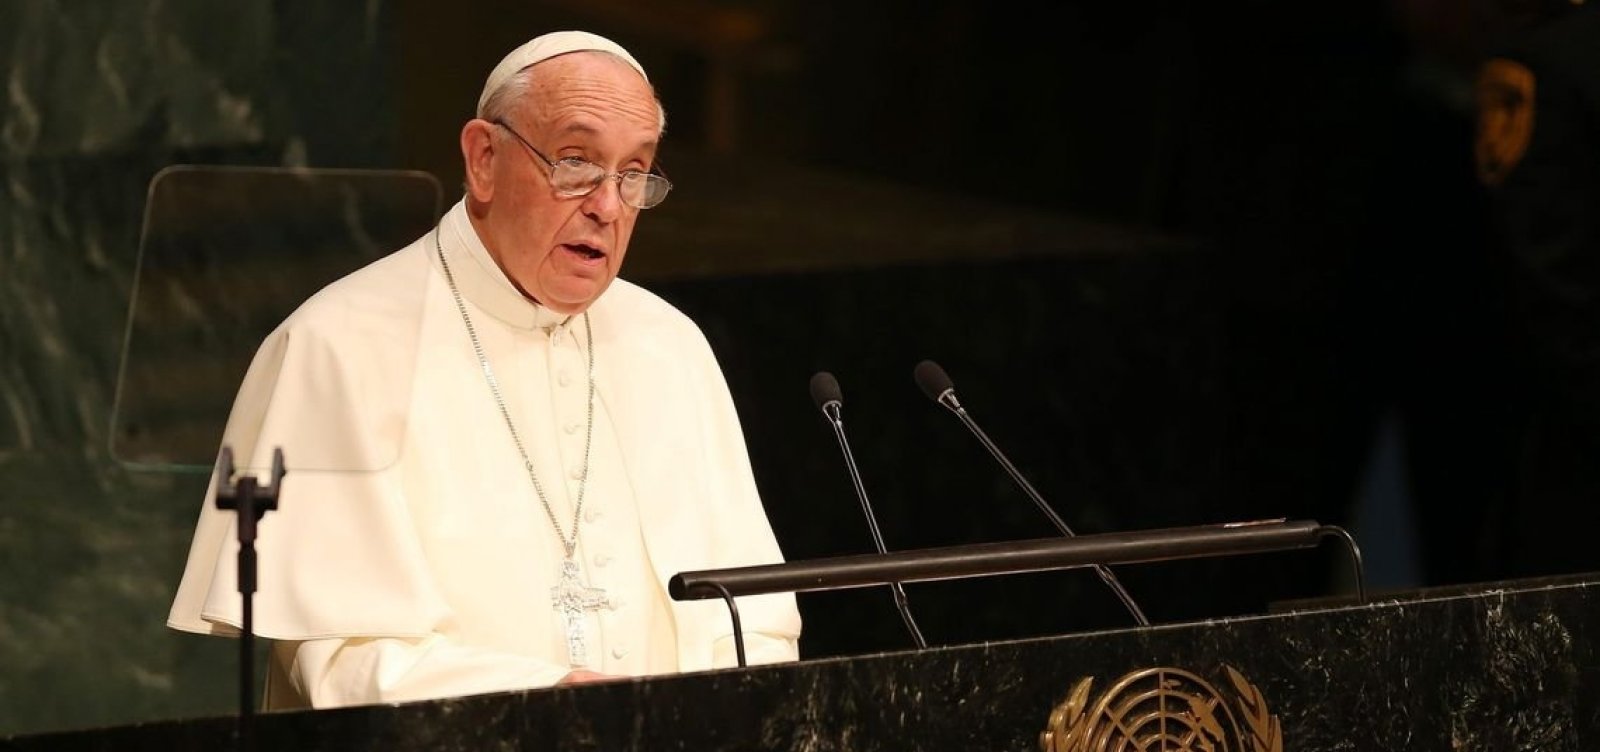 Papa apresenta 21 propostas para deter abusos sexuais no meio religioso